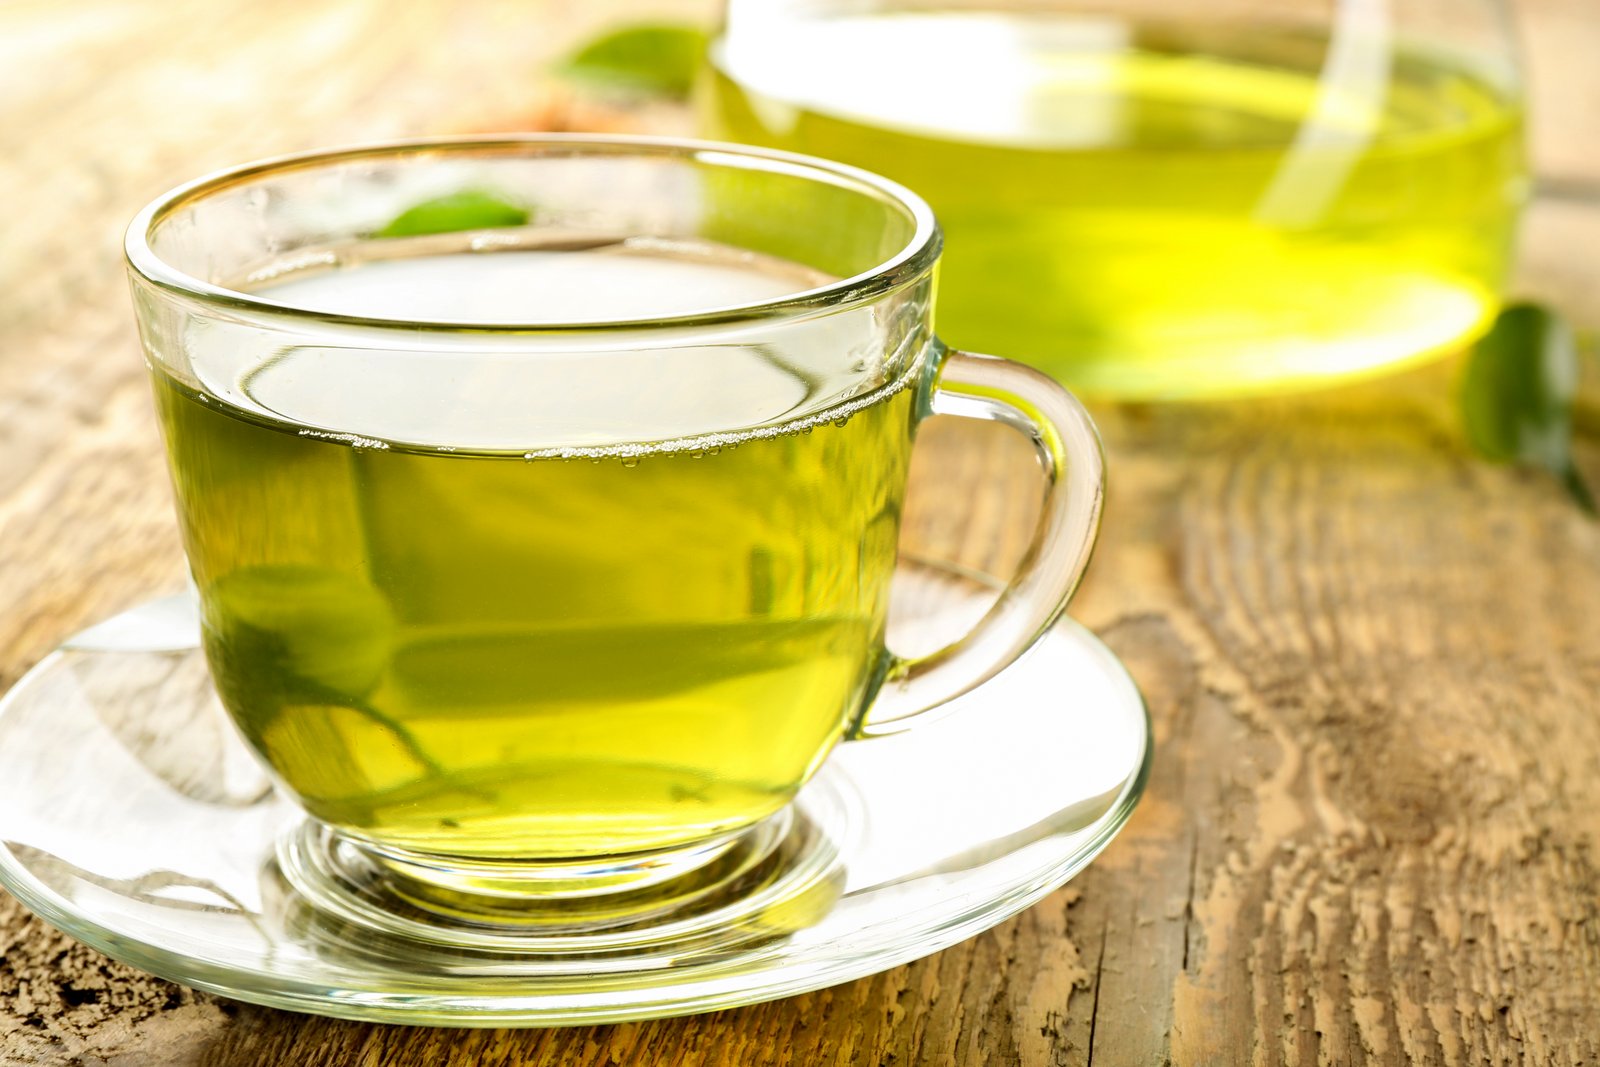 The best ways to enjoy green tea